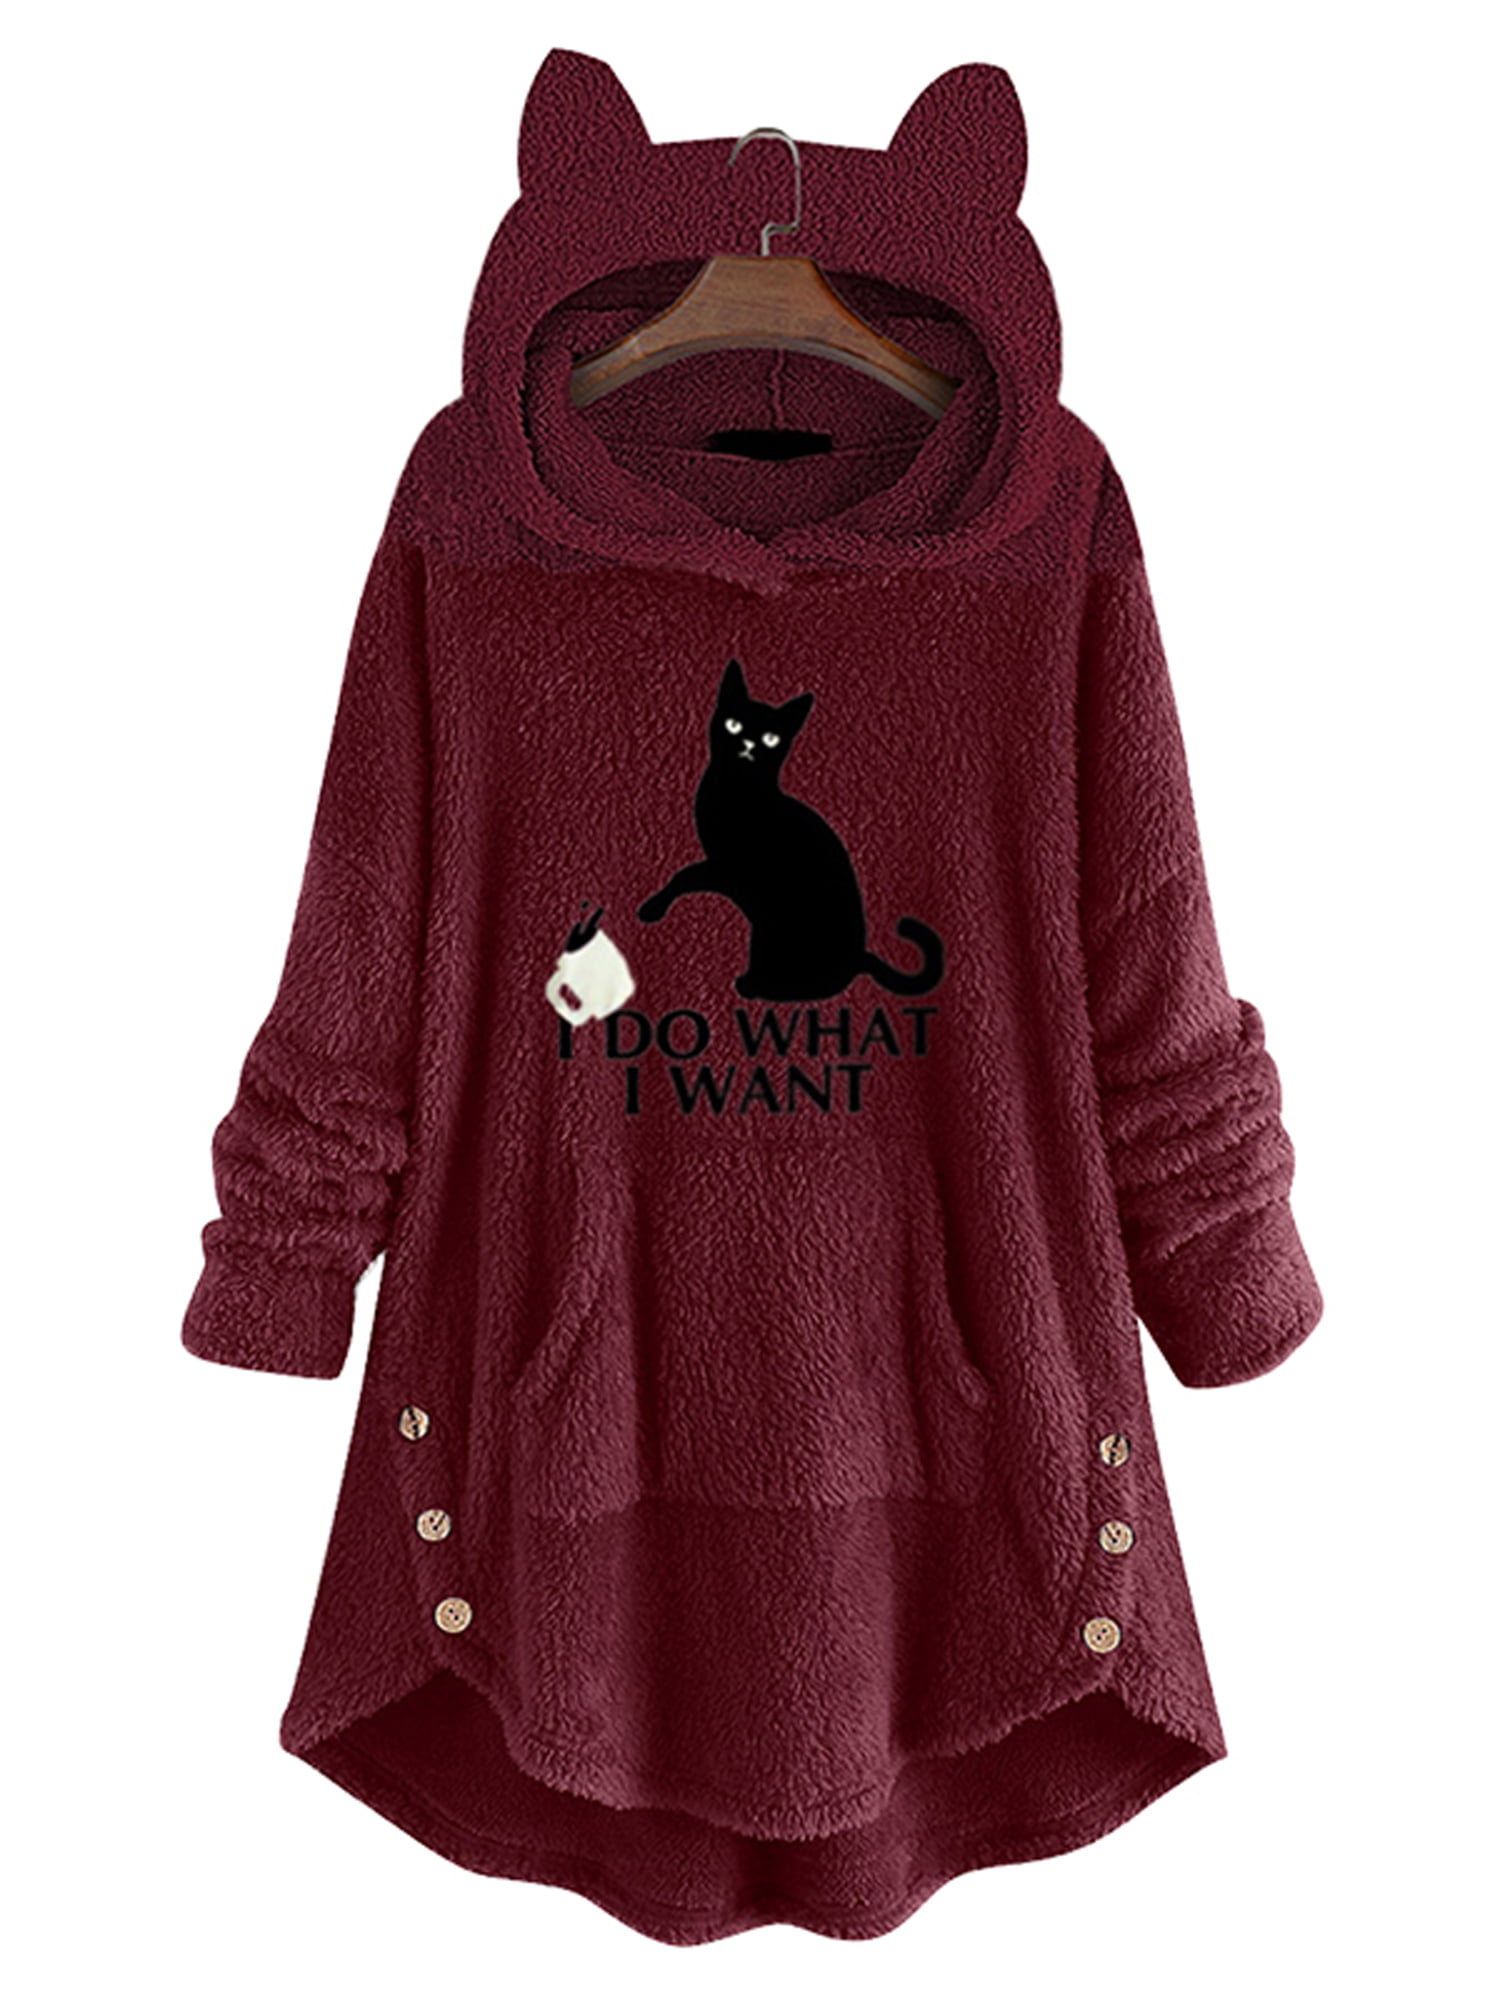 FUNEY Plus Size 3D Animal Printed Fleece Hooded Sweatshirt Long Sleeve Drawstring Cute Pullover Shirts Tops for Women